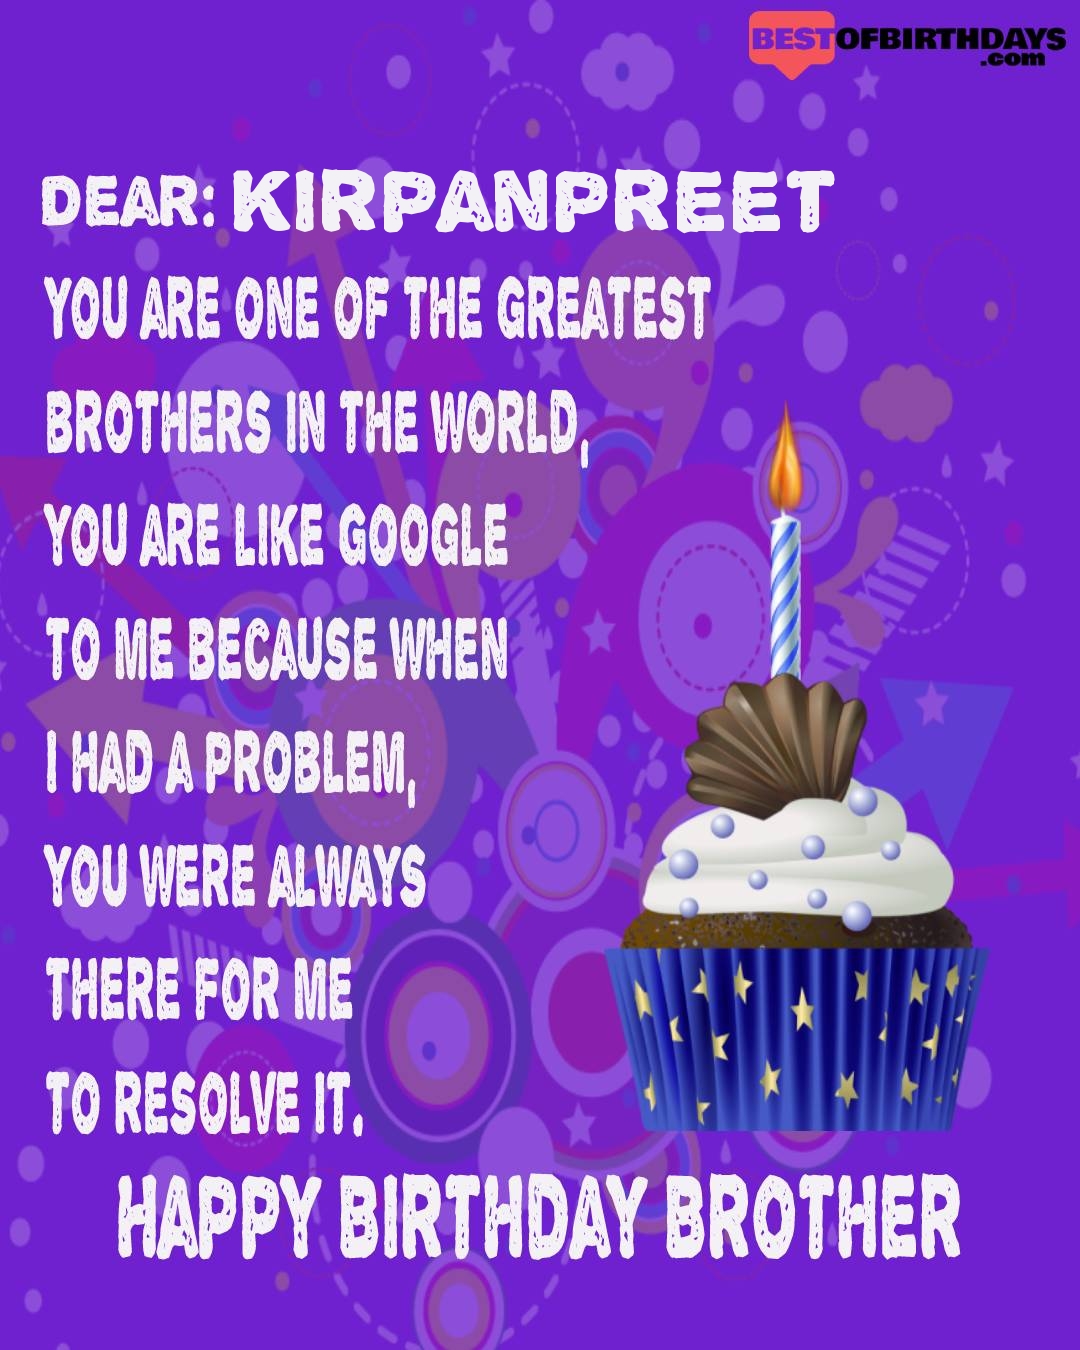 Happy birthday kirpanpreet bhai brother bro